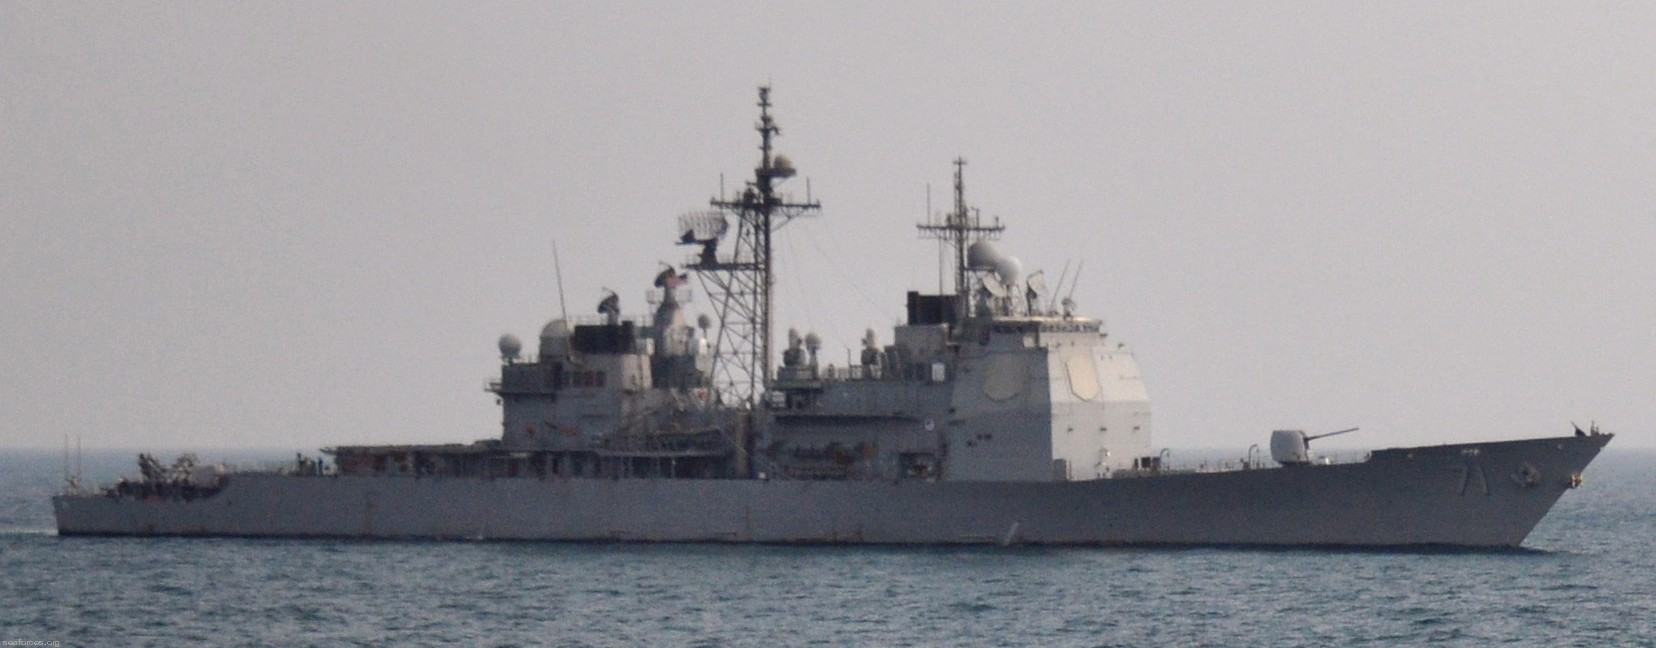 cg-71 uss cape st. george ticonderoga class guided missile cruiser us navy 48 arabian gulf 2011